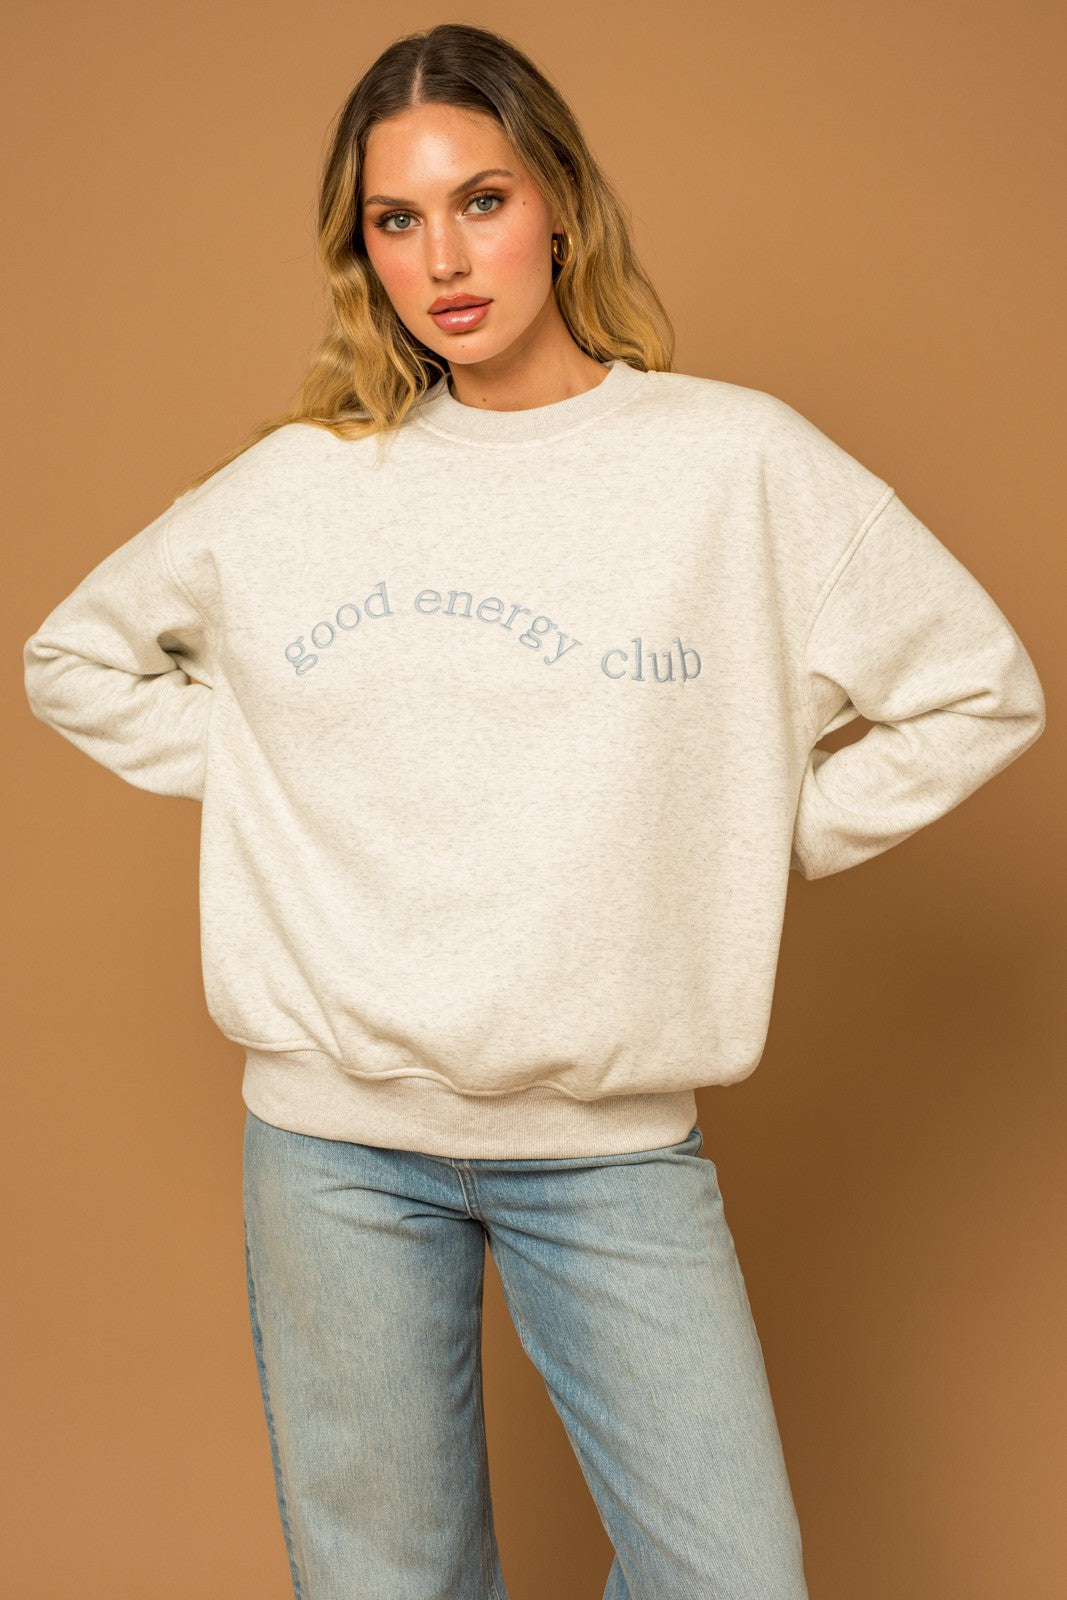 Good Energy Club Sweatshirt - Multiple Colors